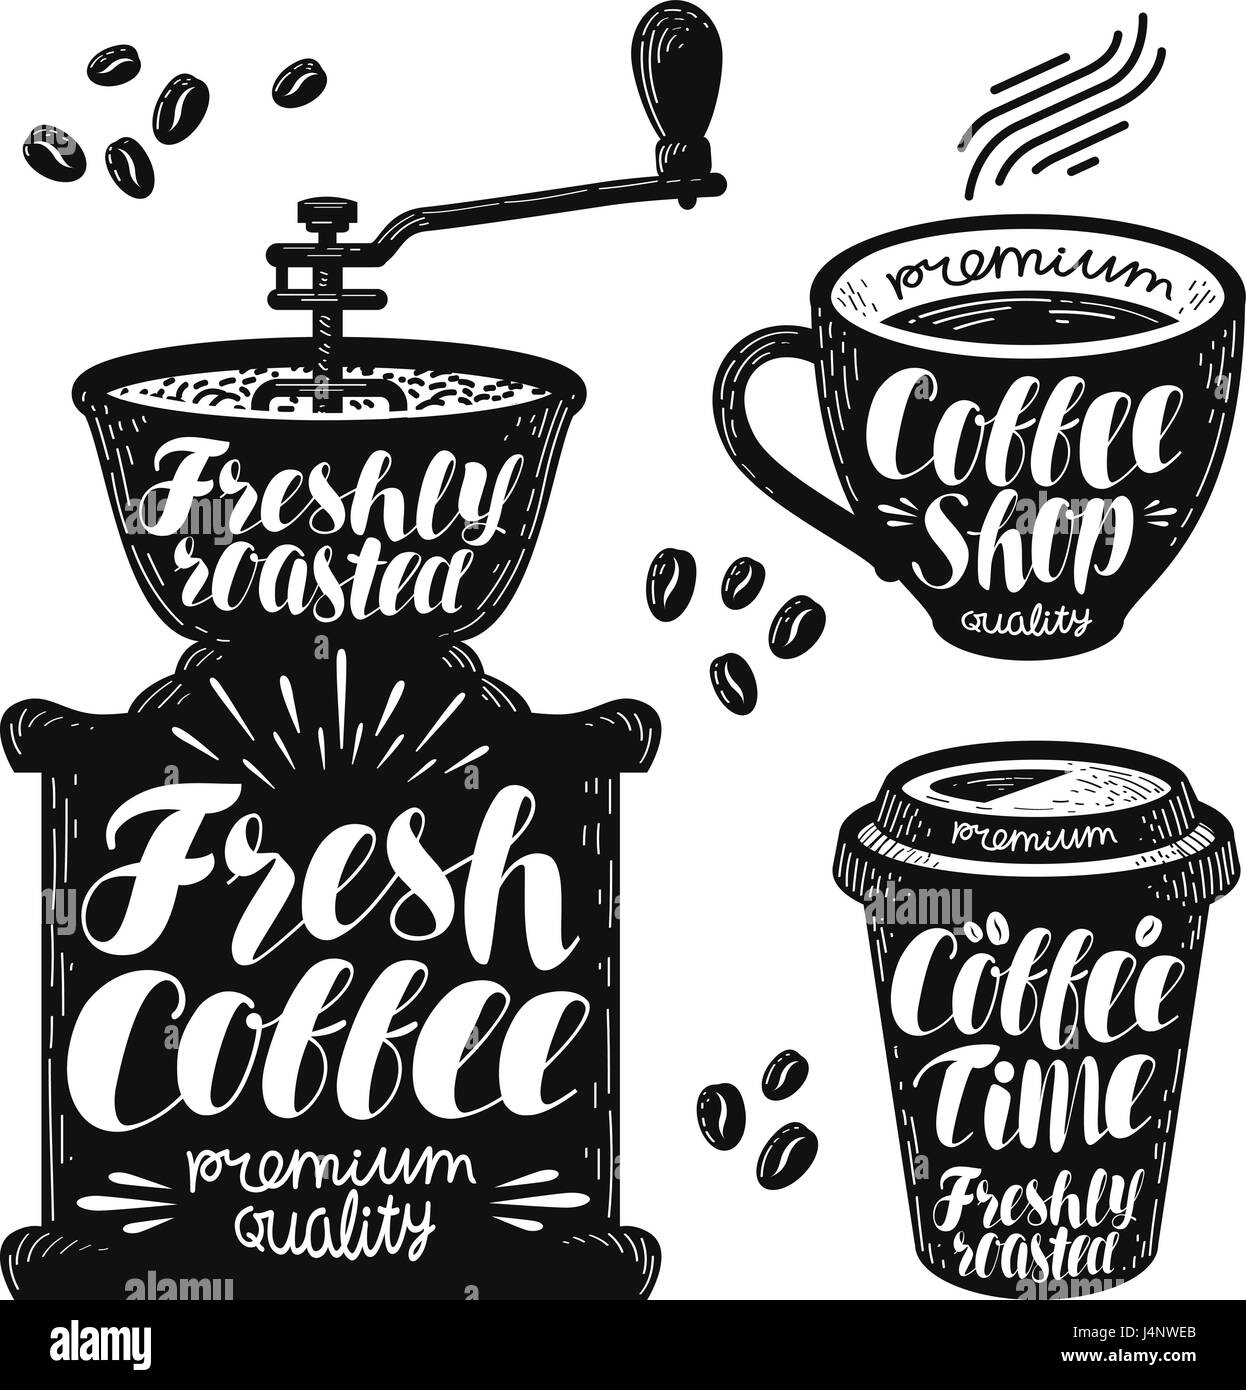 Coffee grinder, espresso label set. Cafe, hot drink, cup icon or logo. Handwritten lettering vector illustration Stock Vector